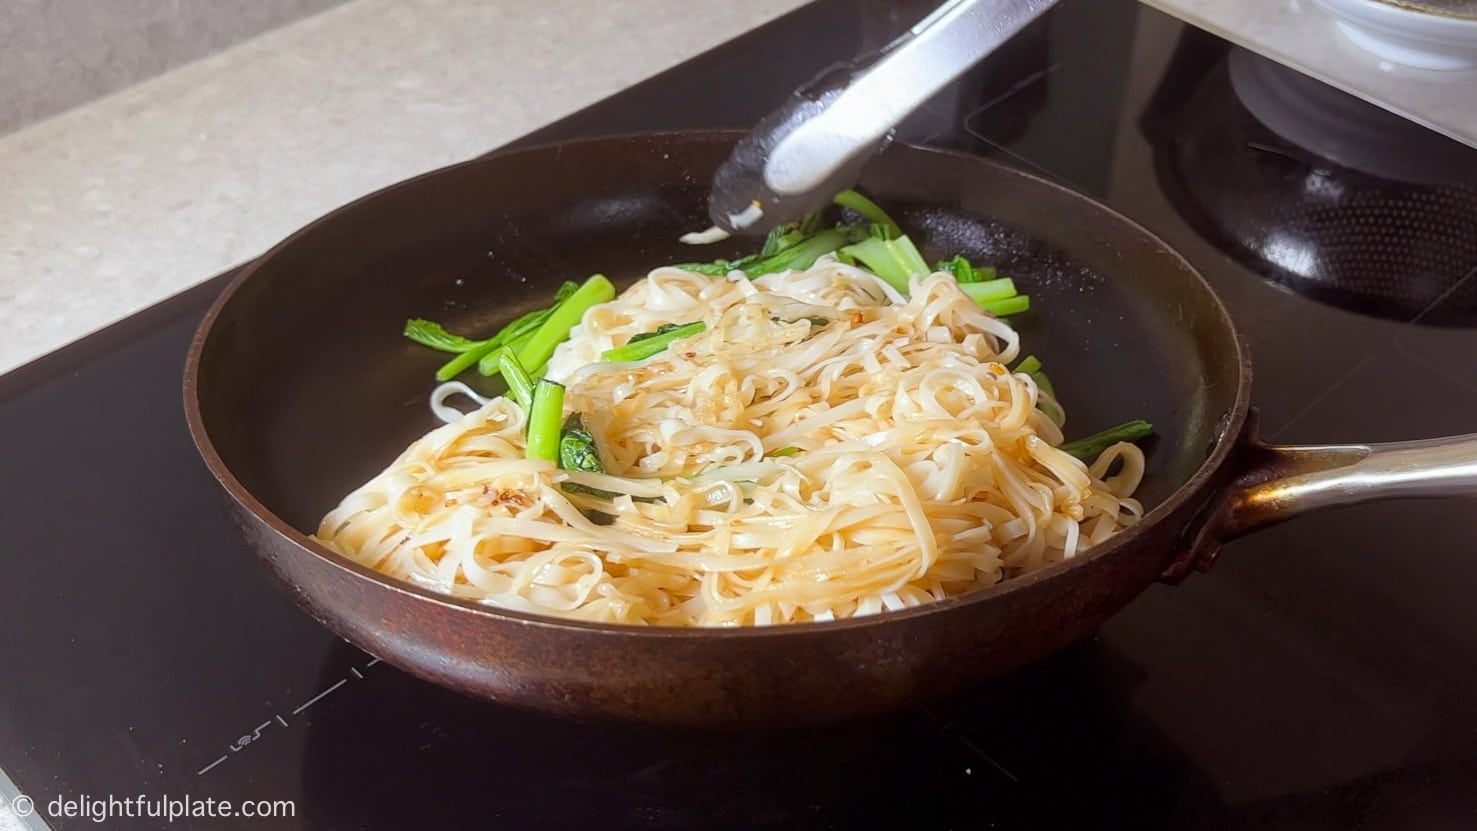 stir-fry rice noodles with veggies